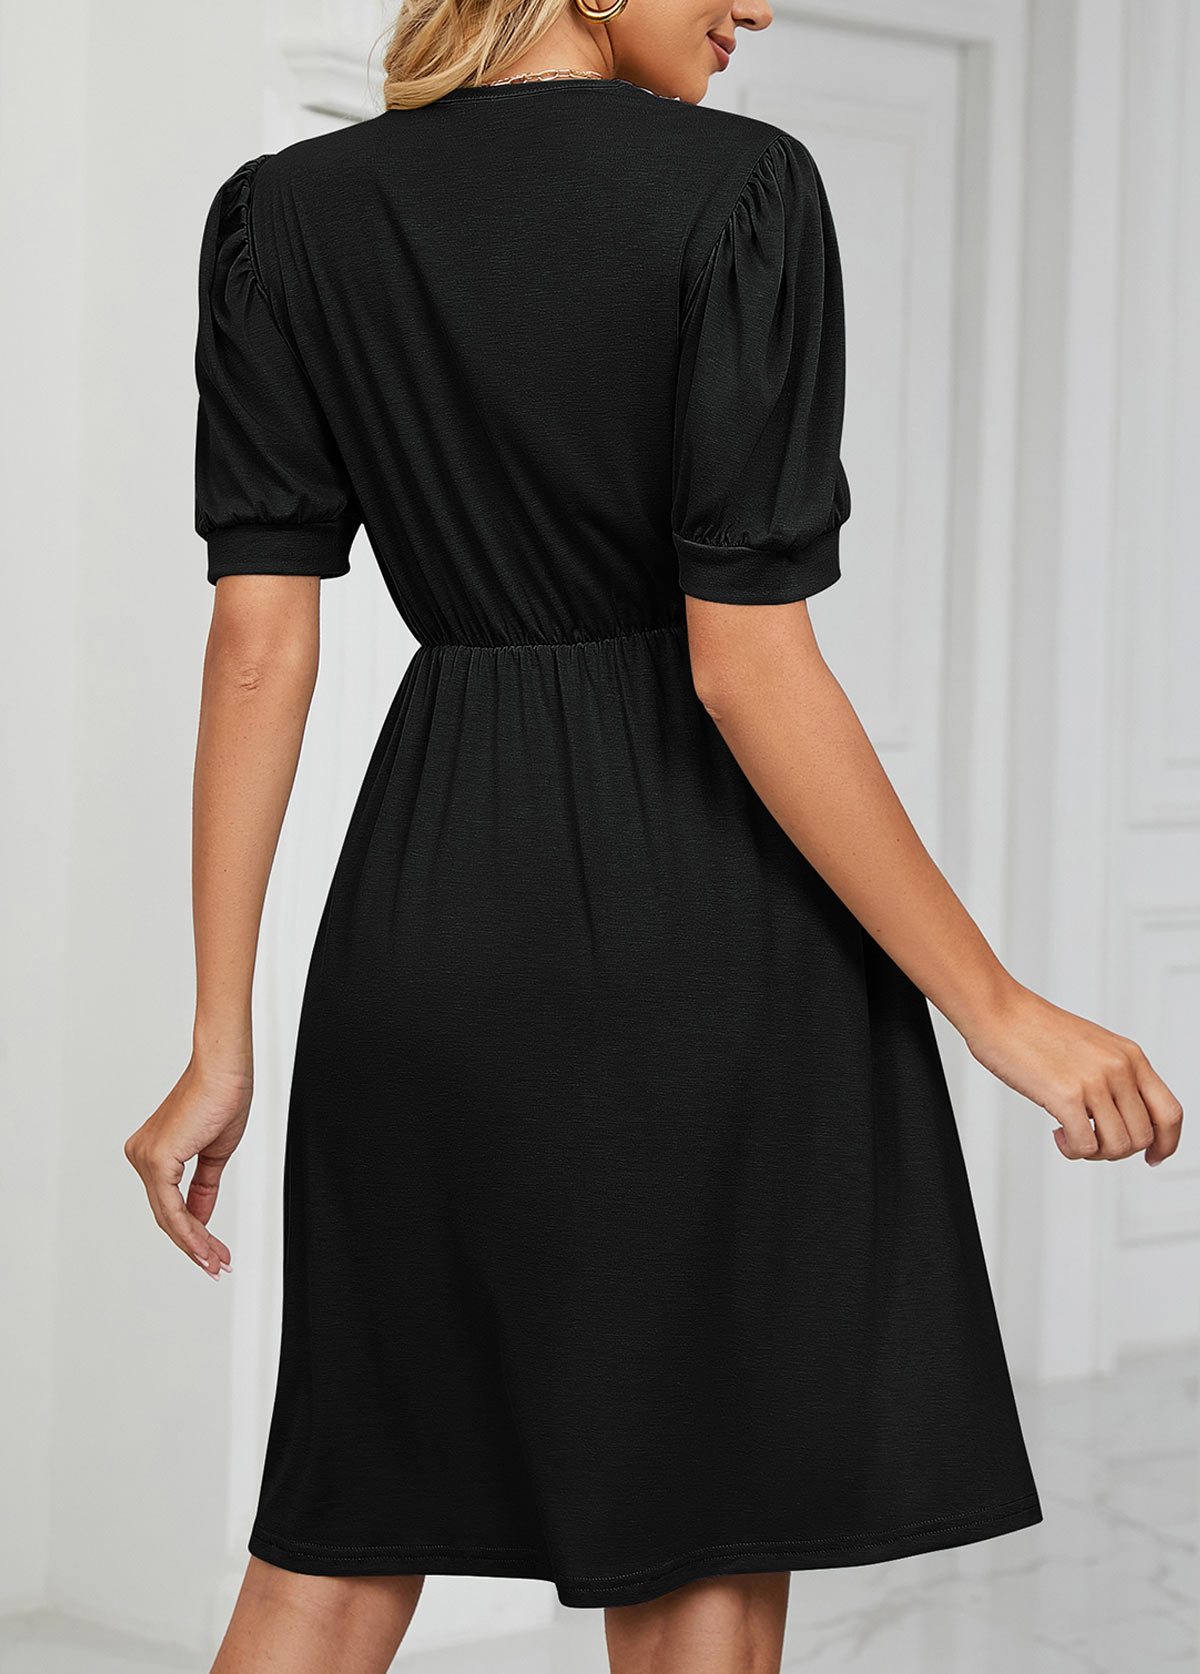 Lace Pocket Black V Neck Short Sleeve Dress